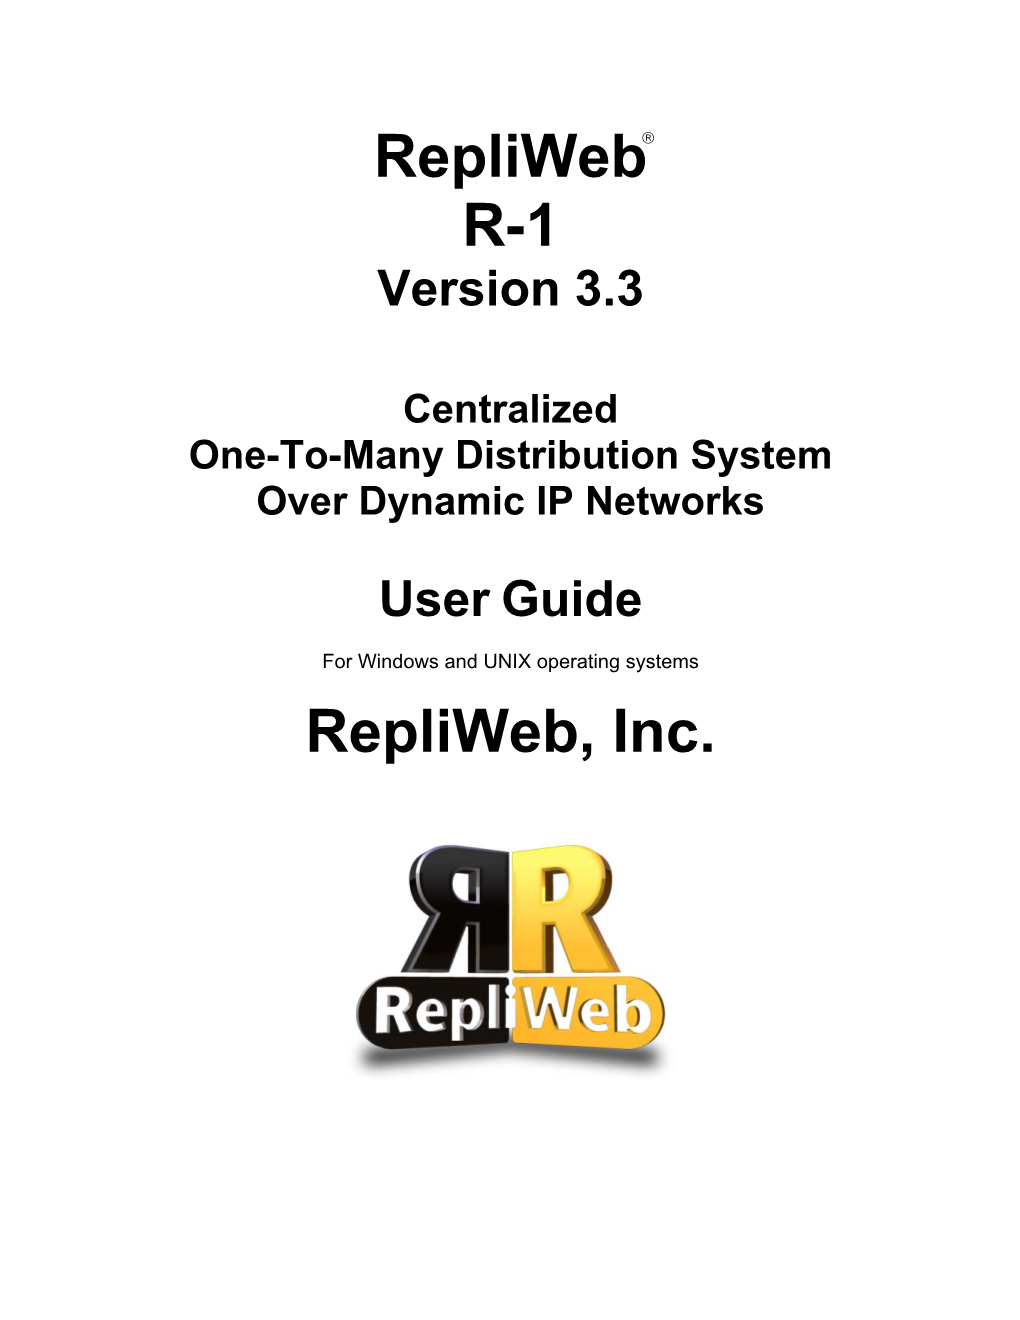 Repliweb R-1 User Guide